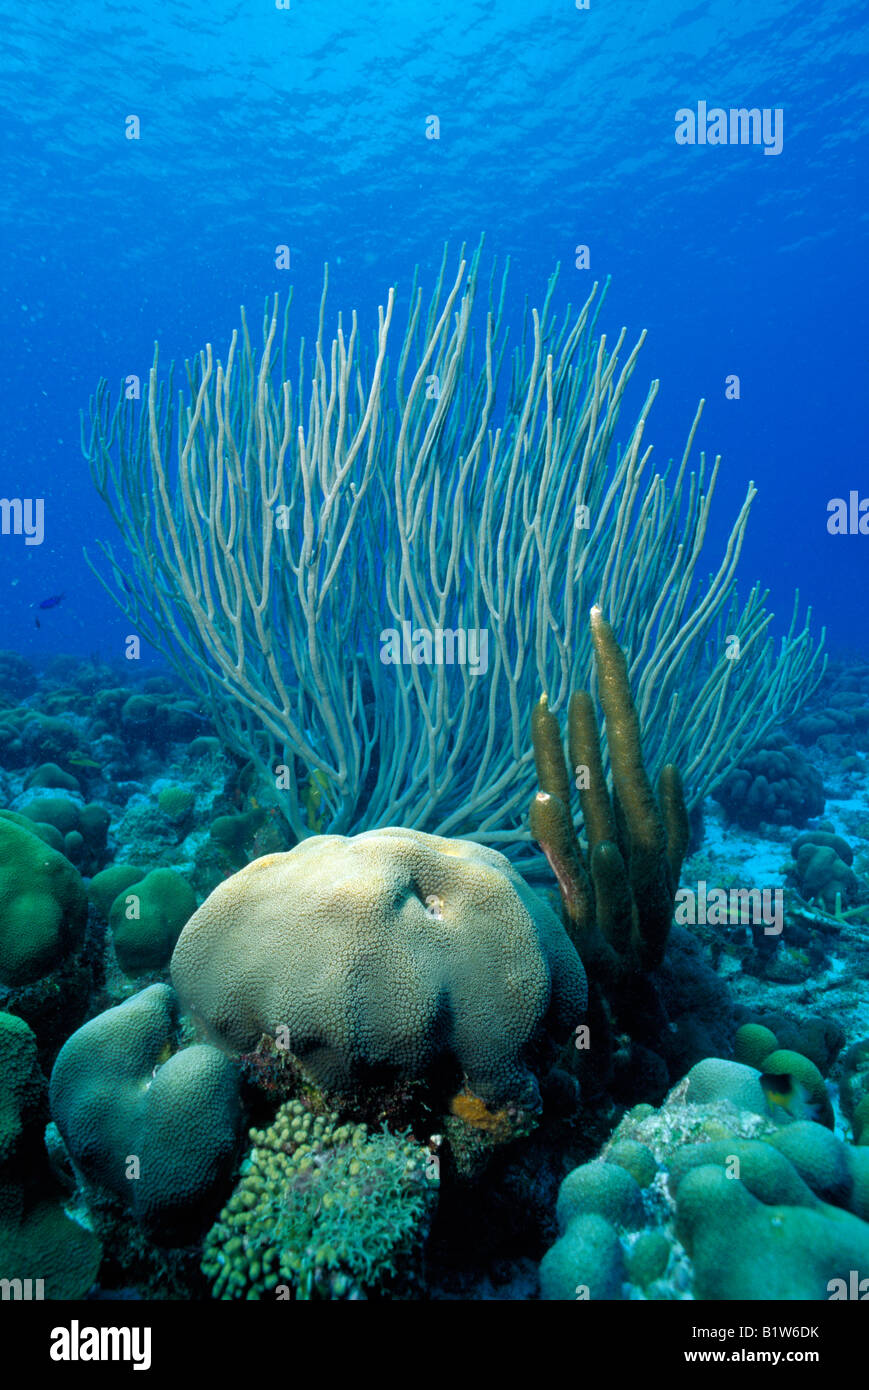 Corals in the Caribbean Sea Stock Photo